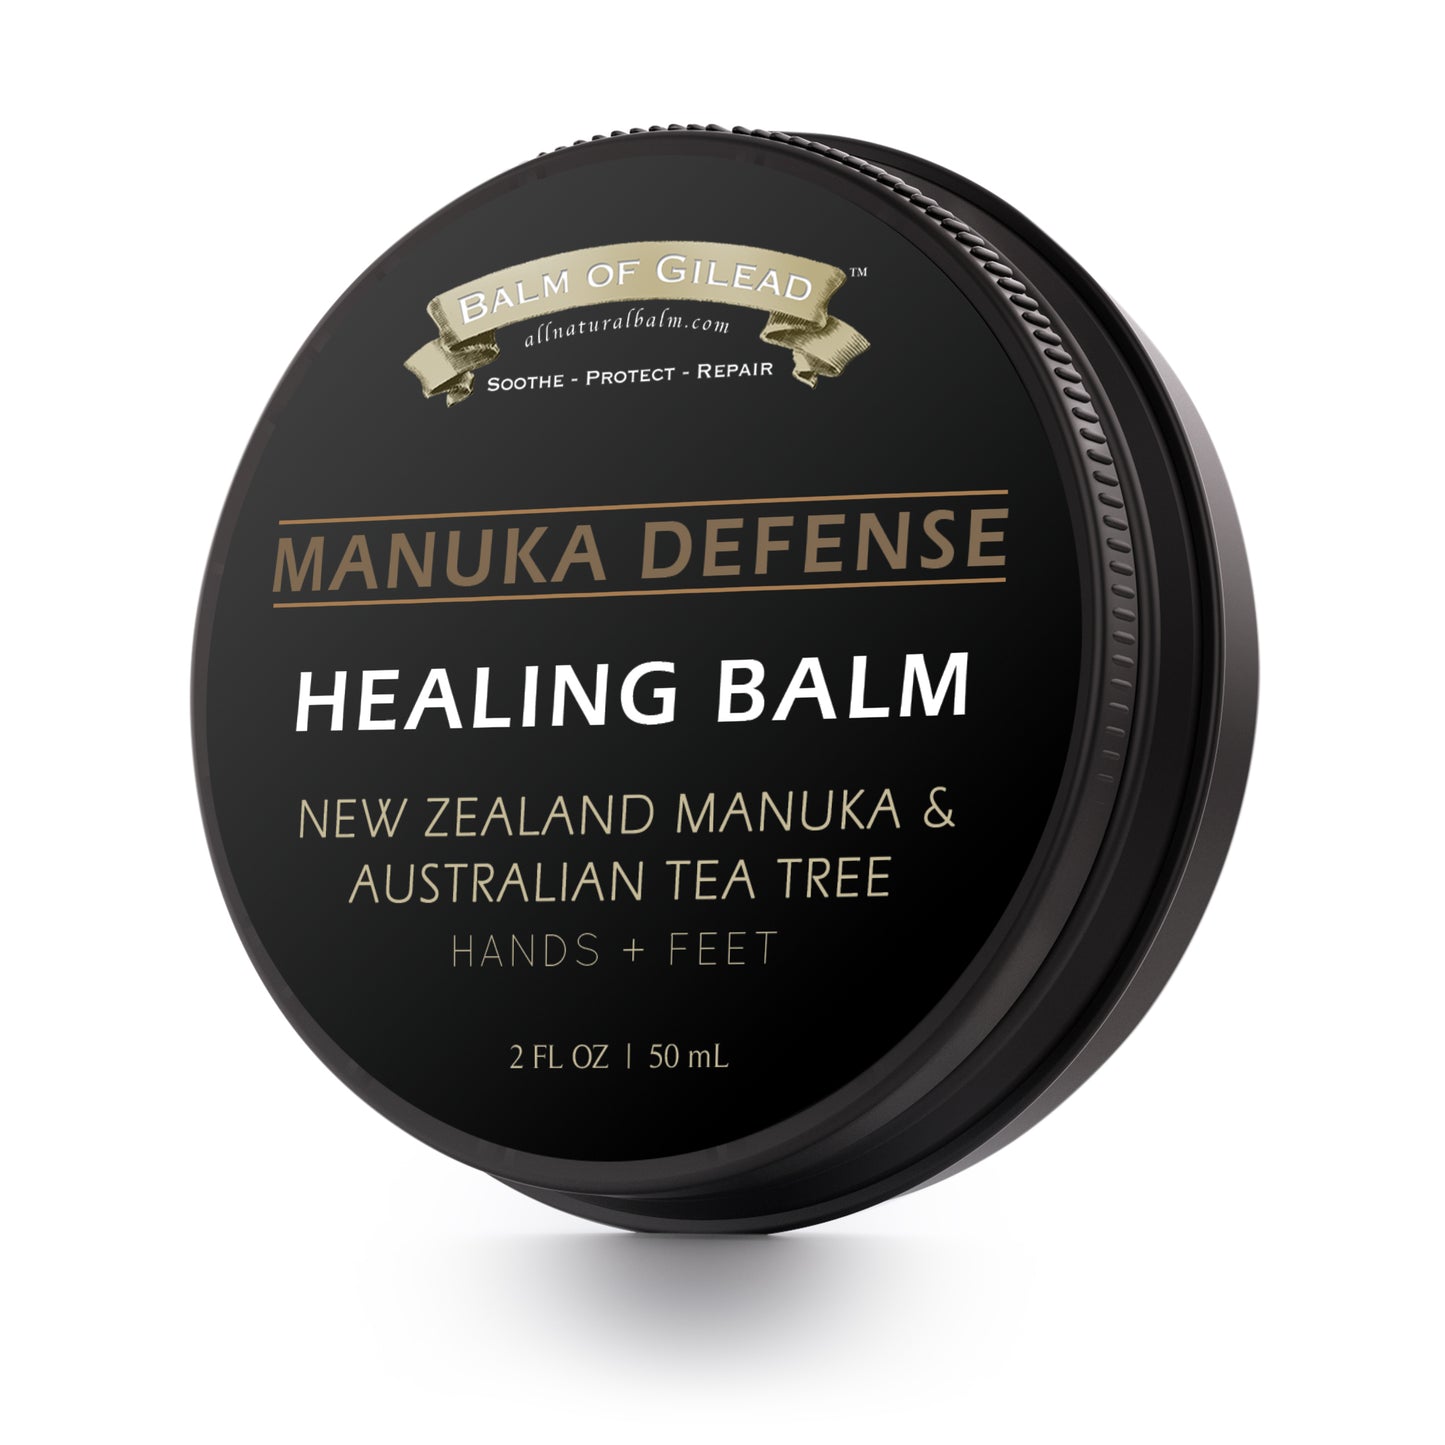 Manuka Defense Healing Balm